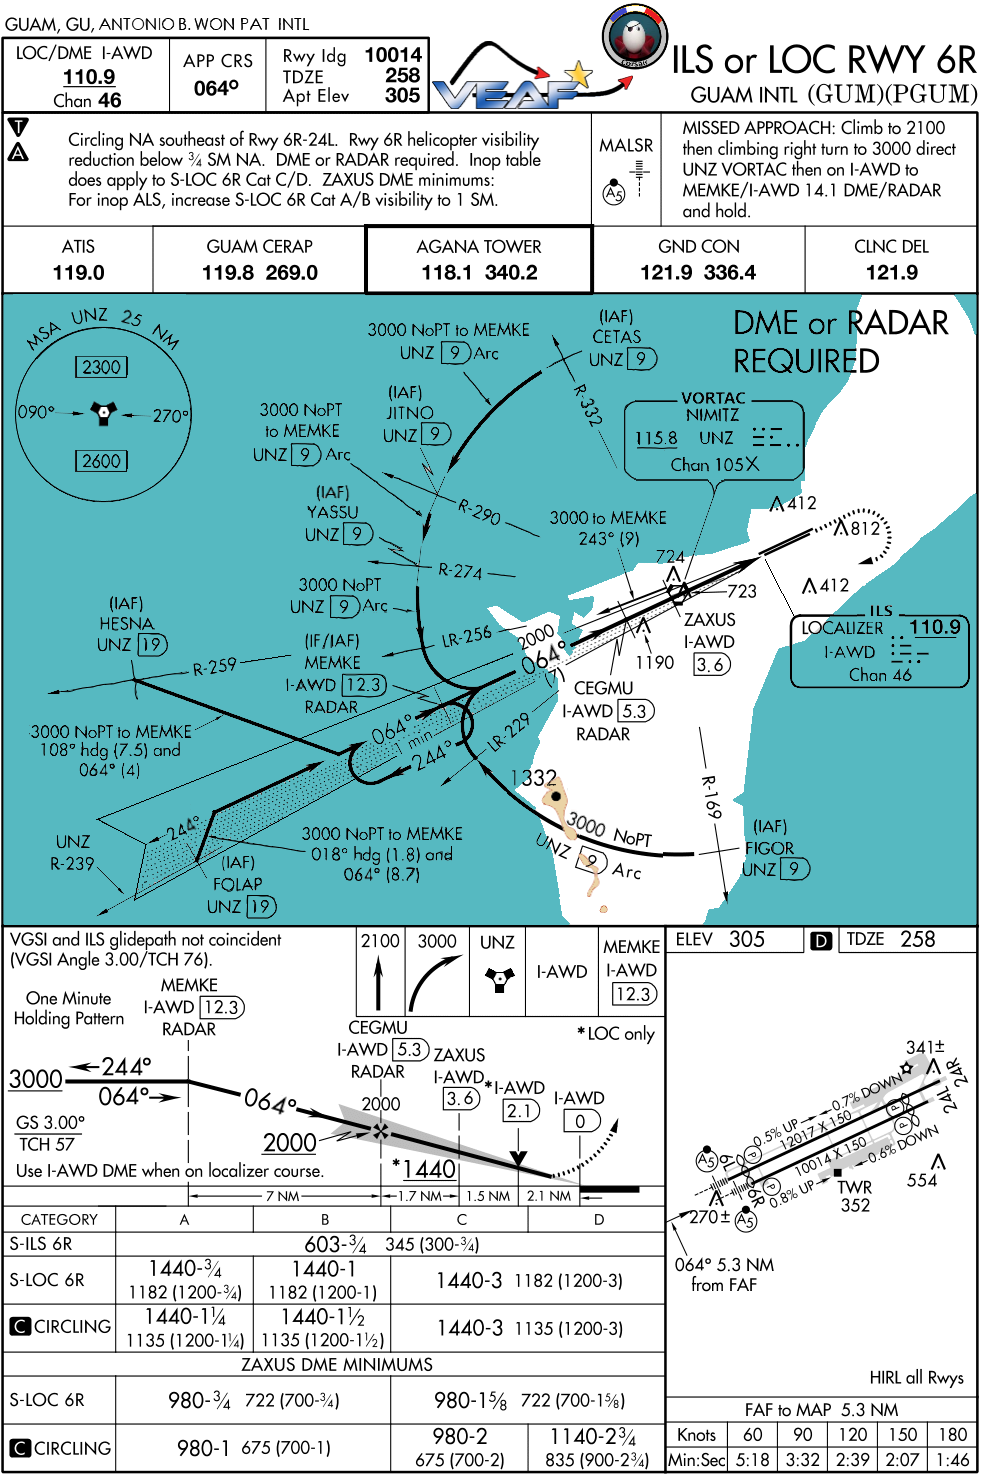 CORSAIR airports approach charts Marianas n°1/1 version 1.1